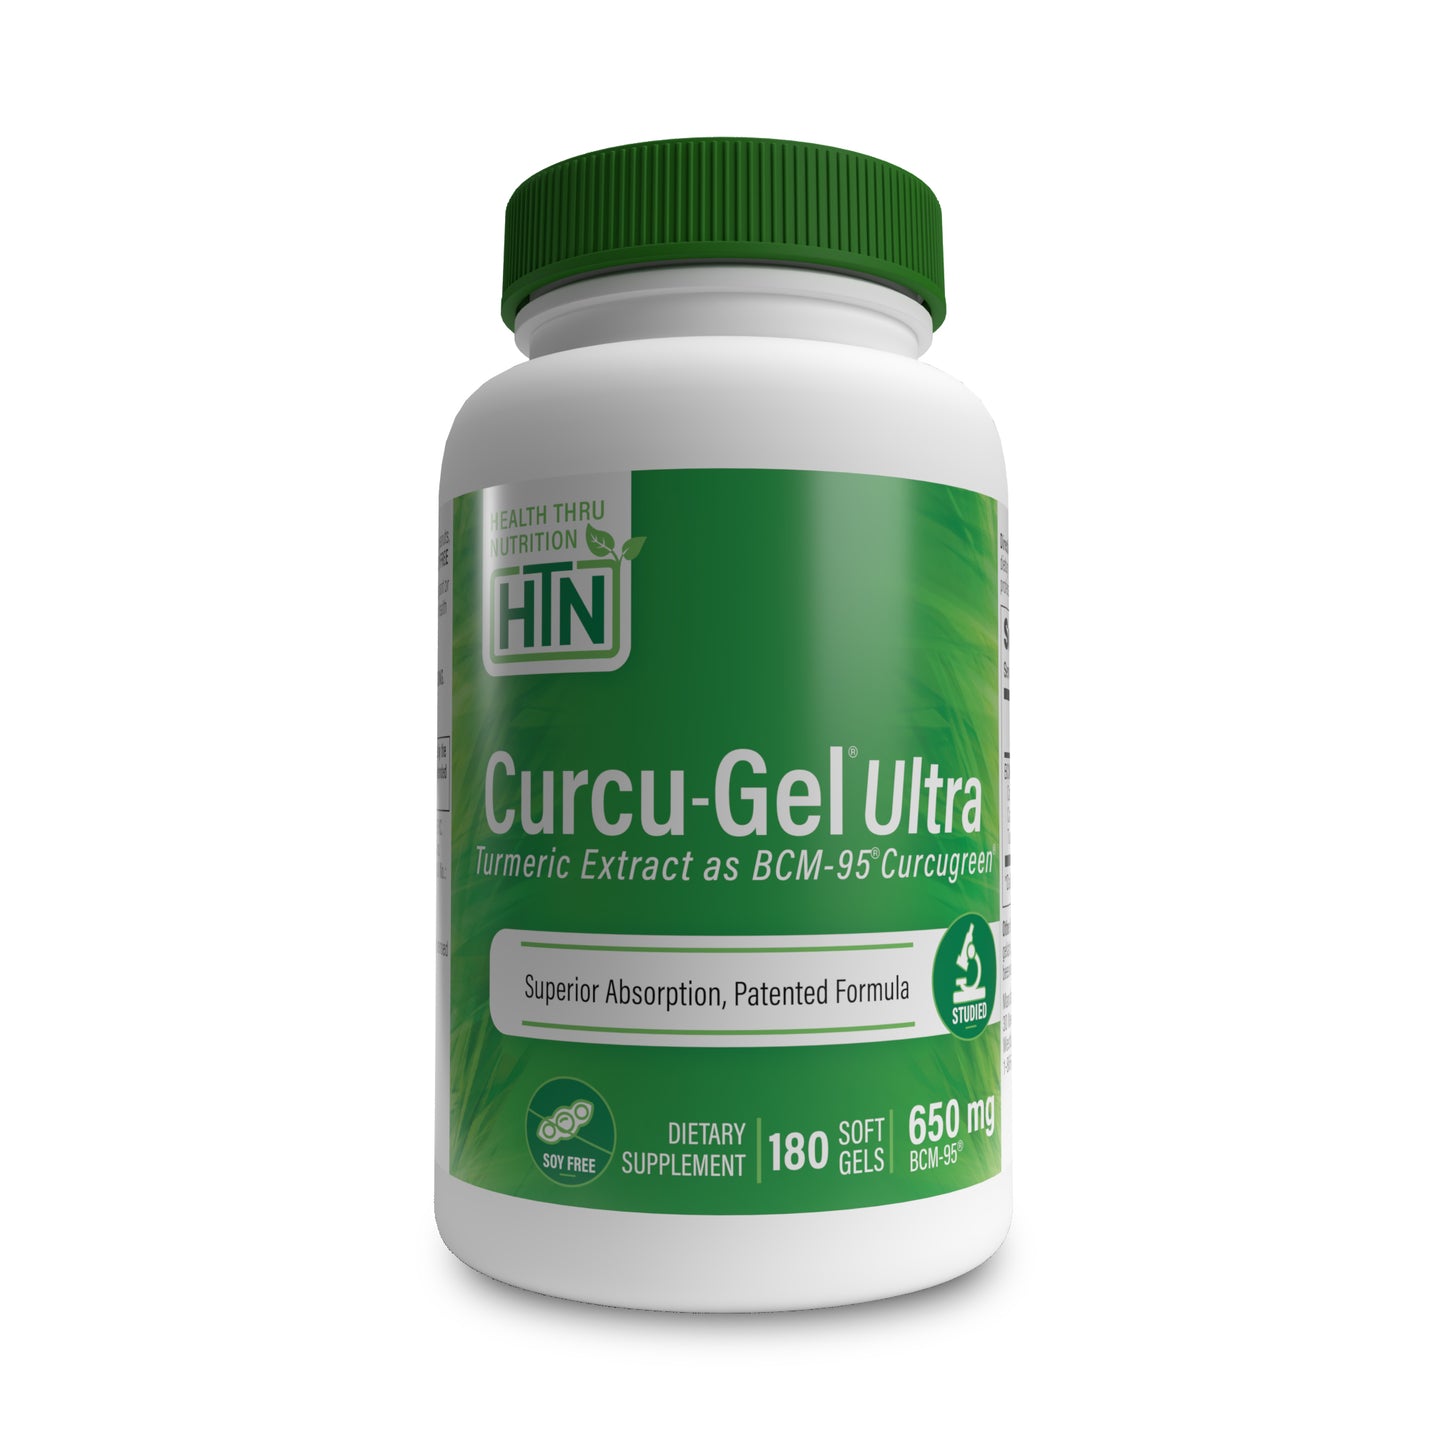 Curcu-Gel® Ultra 650mg BCM-95® Curcugreen® Turmeric Extract